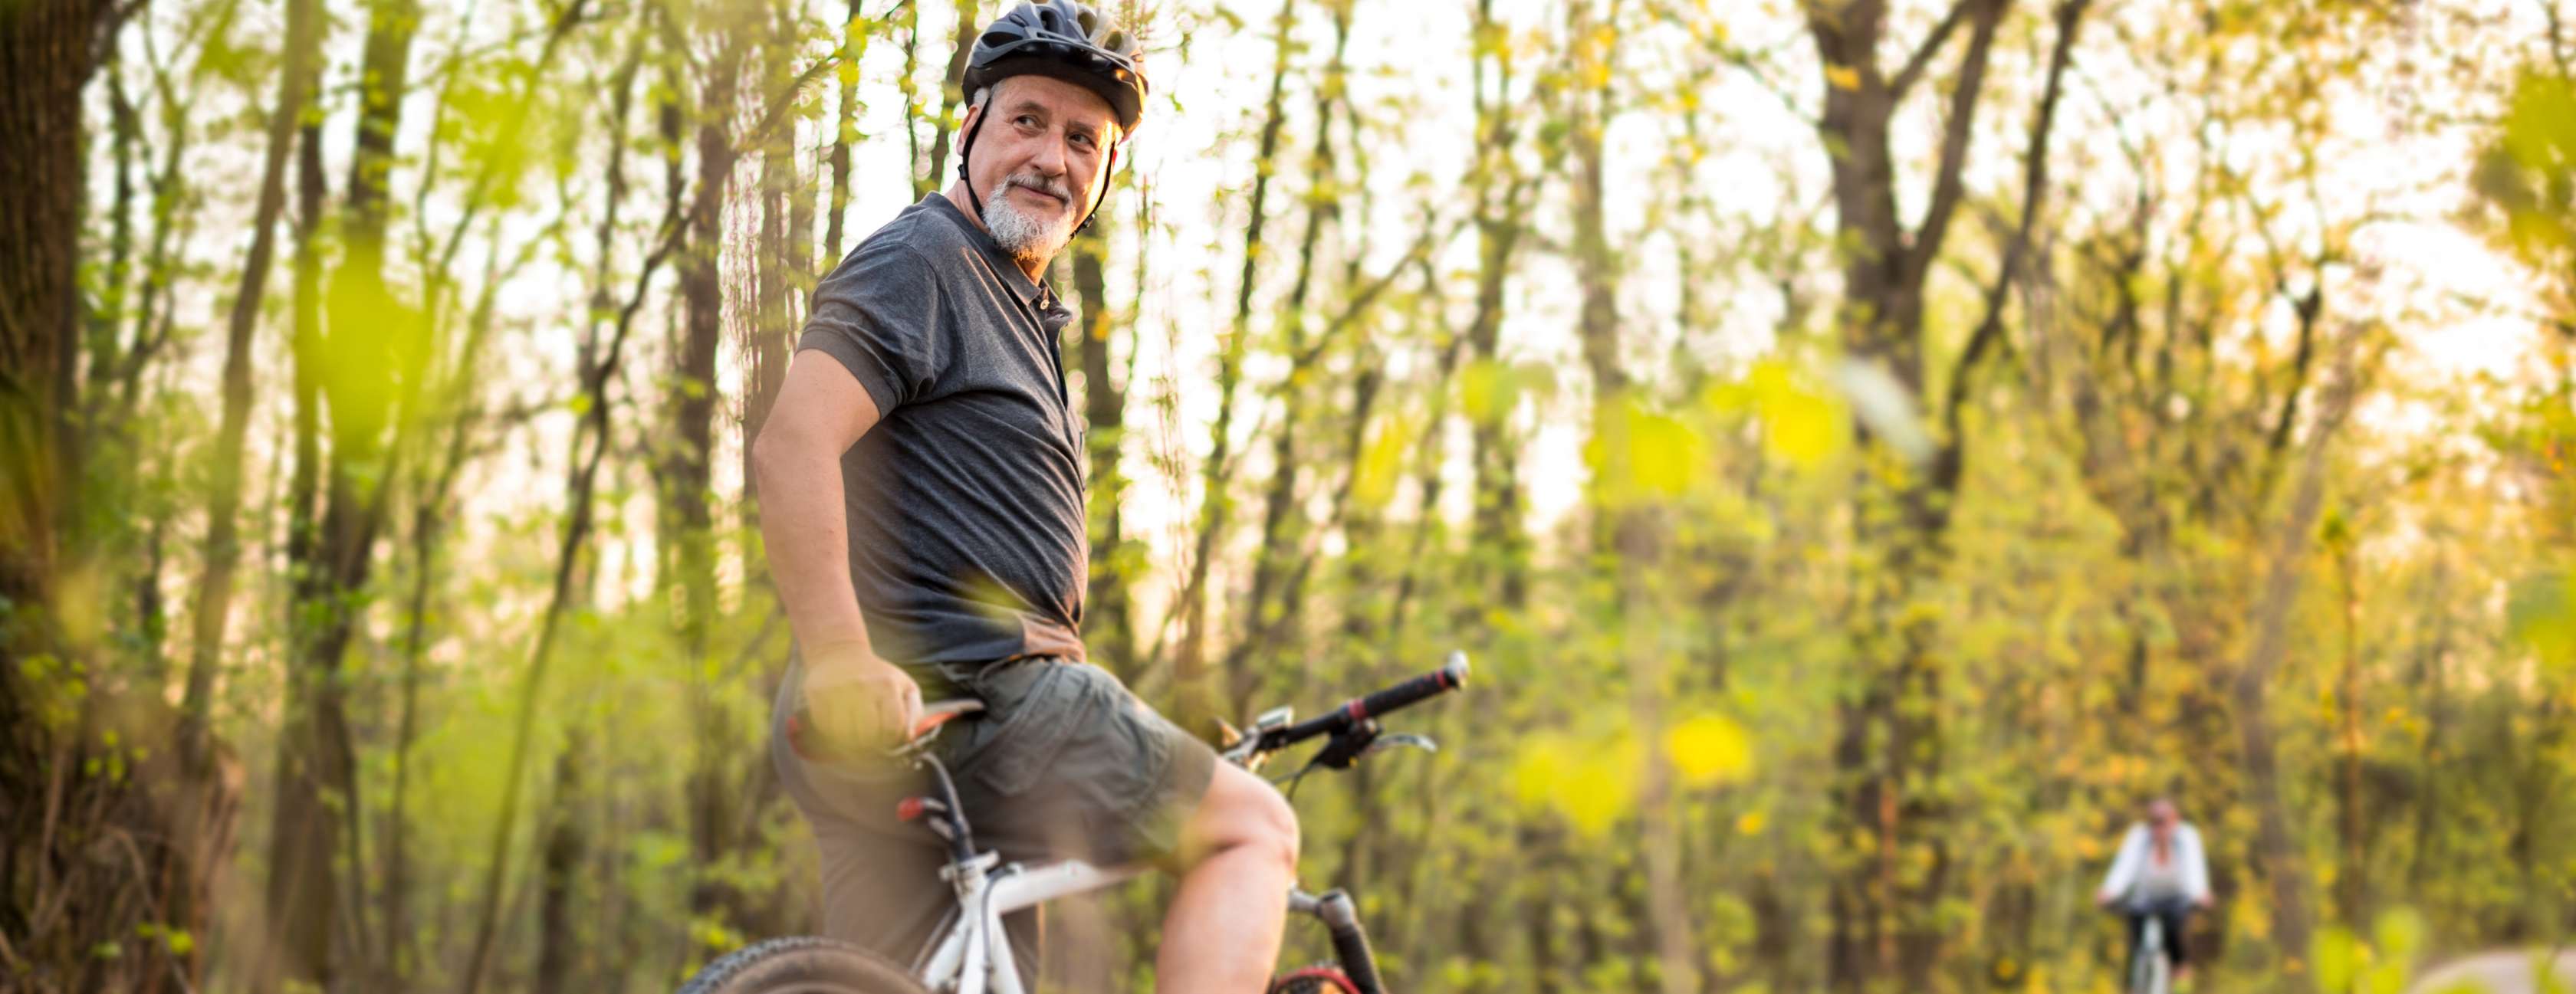 Ältere Mann fährt Mountainbike im Wald